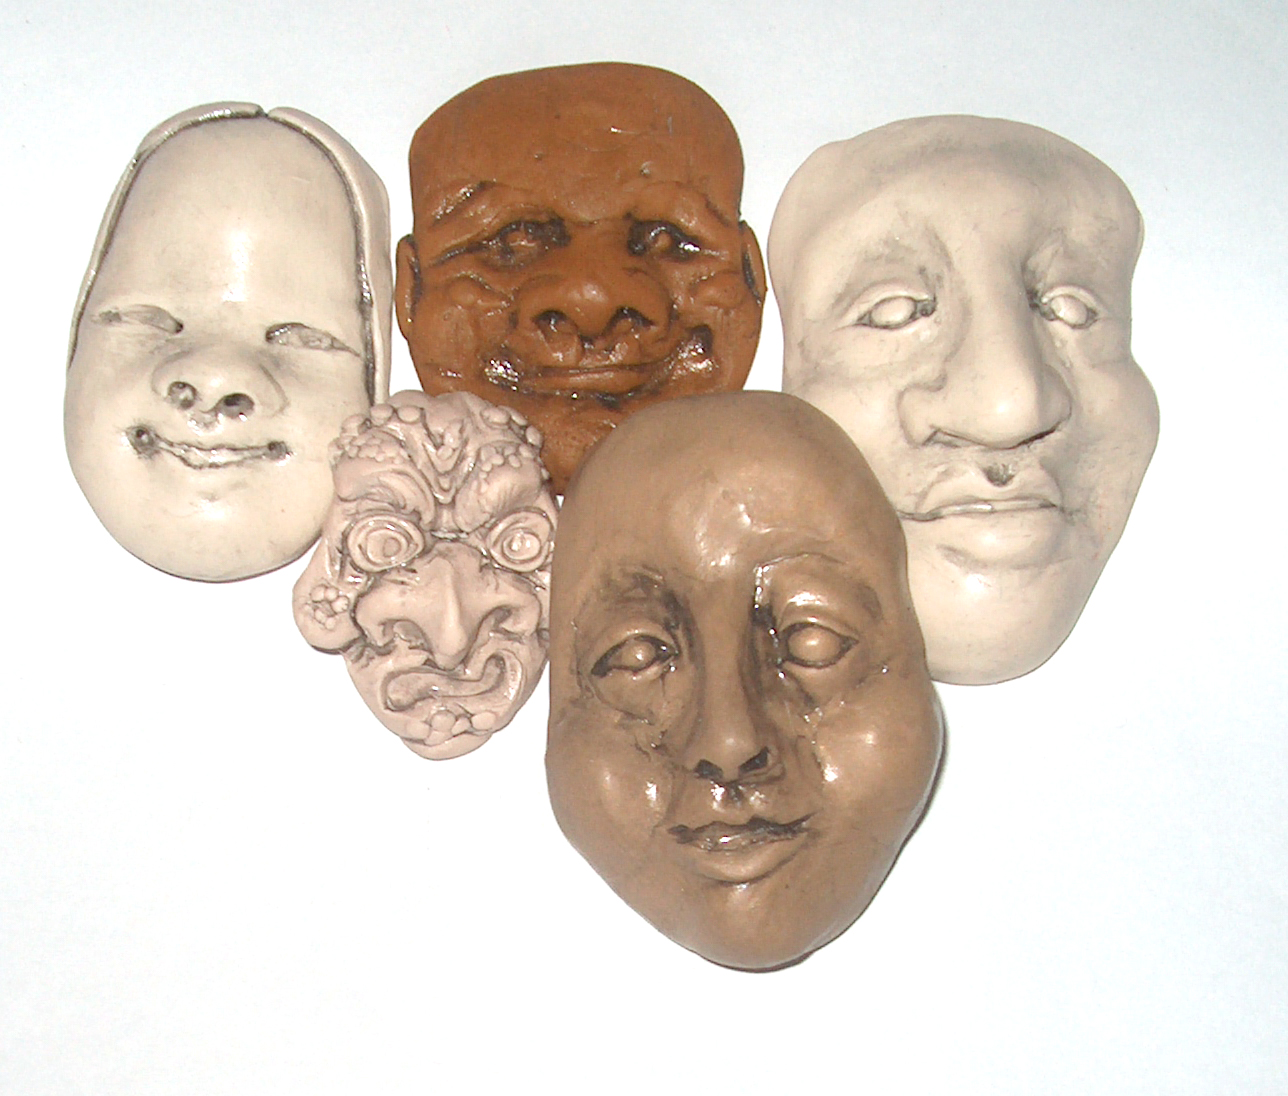 clay faces